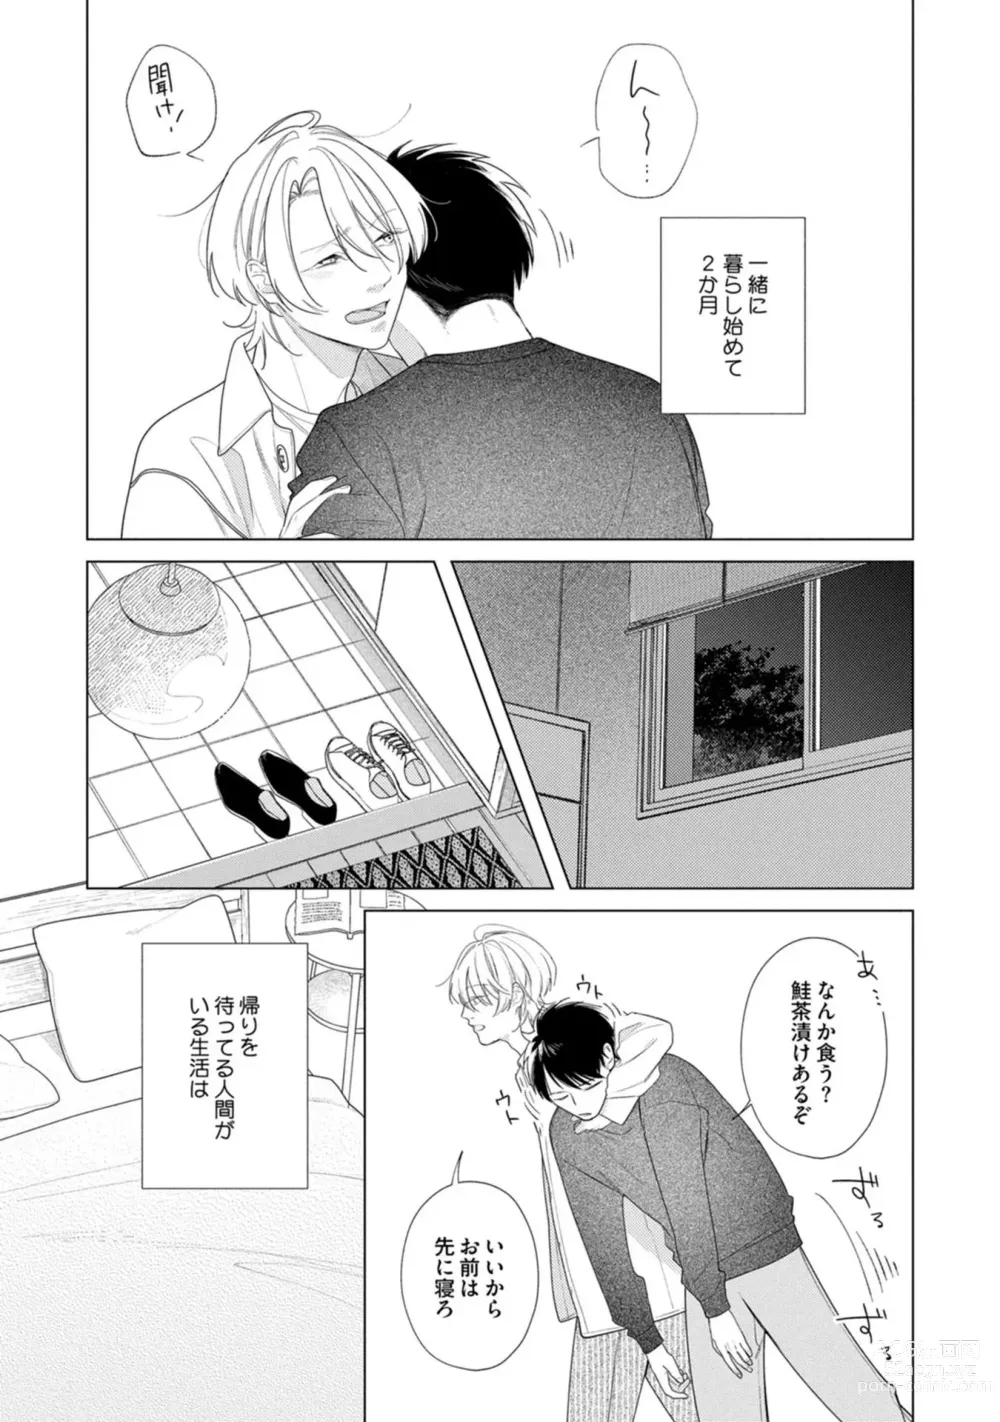 Page 8 of manga Yoru mo, Asa mo